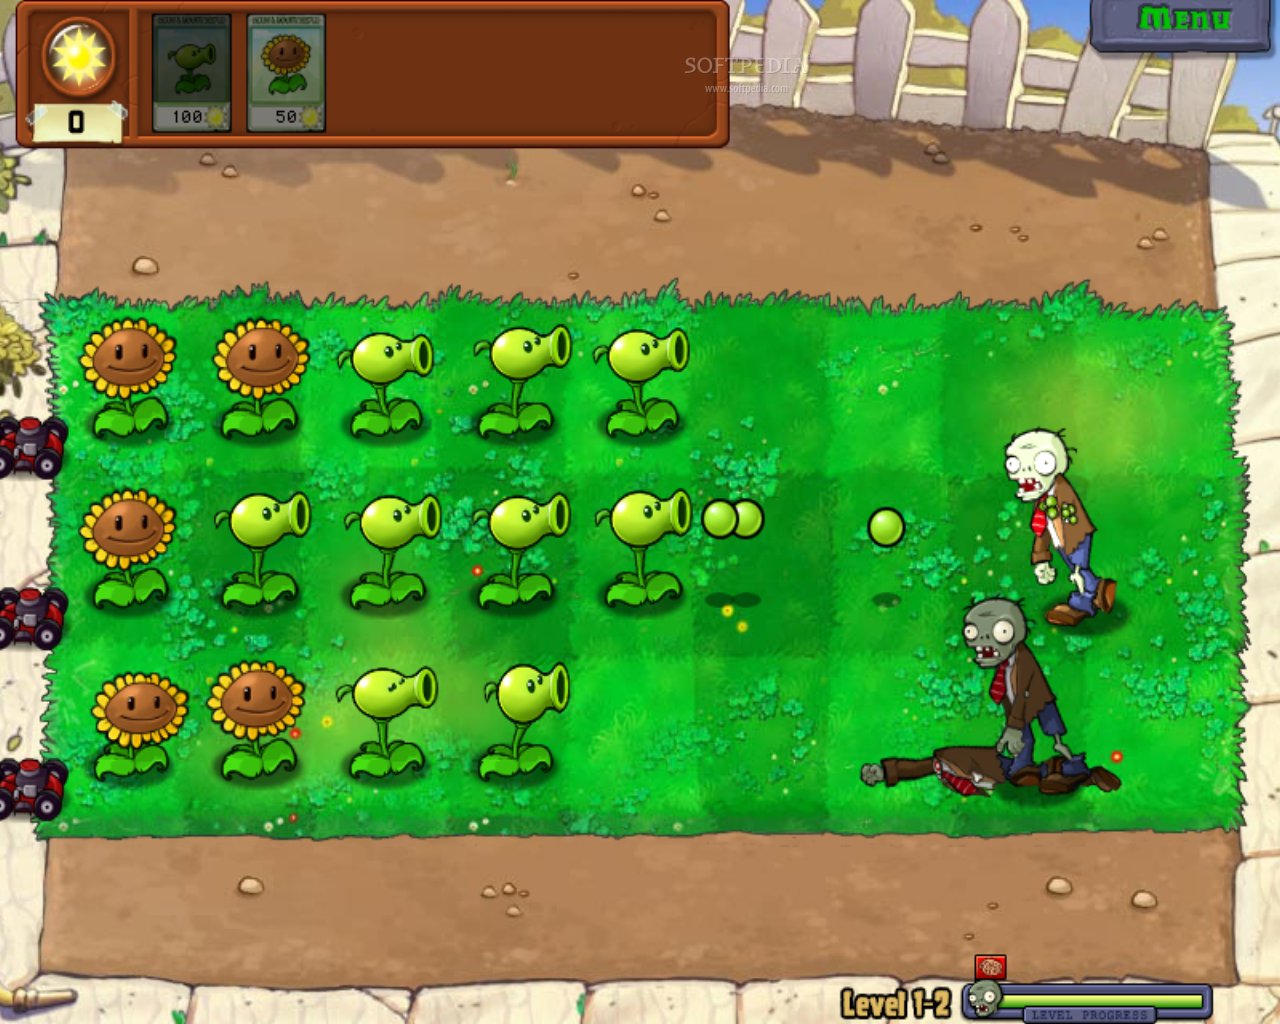 plants vs zombies free online